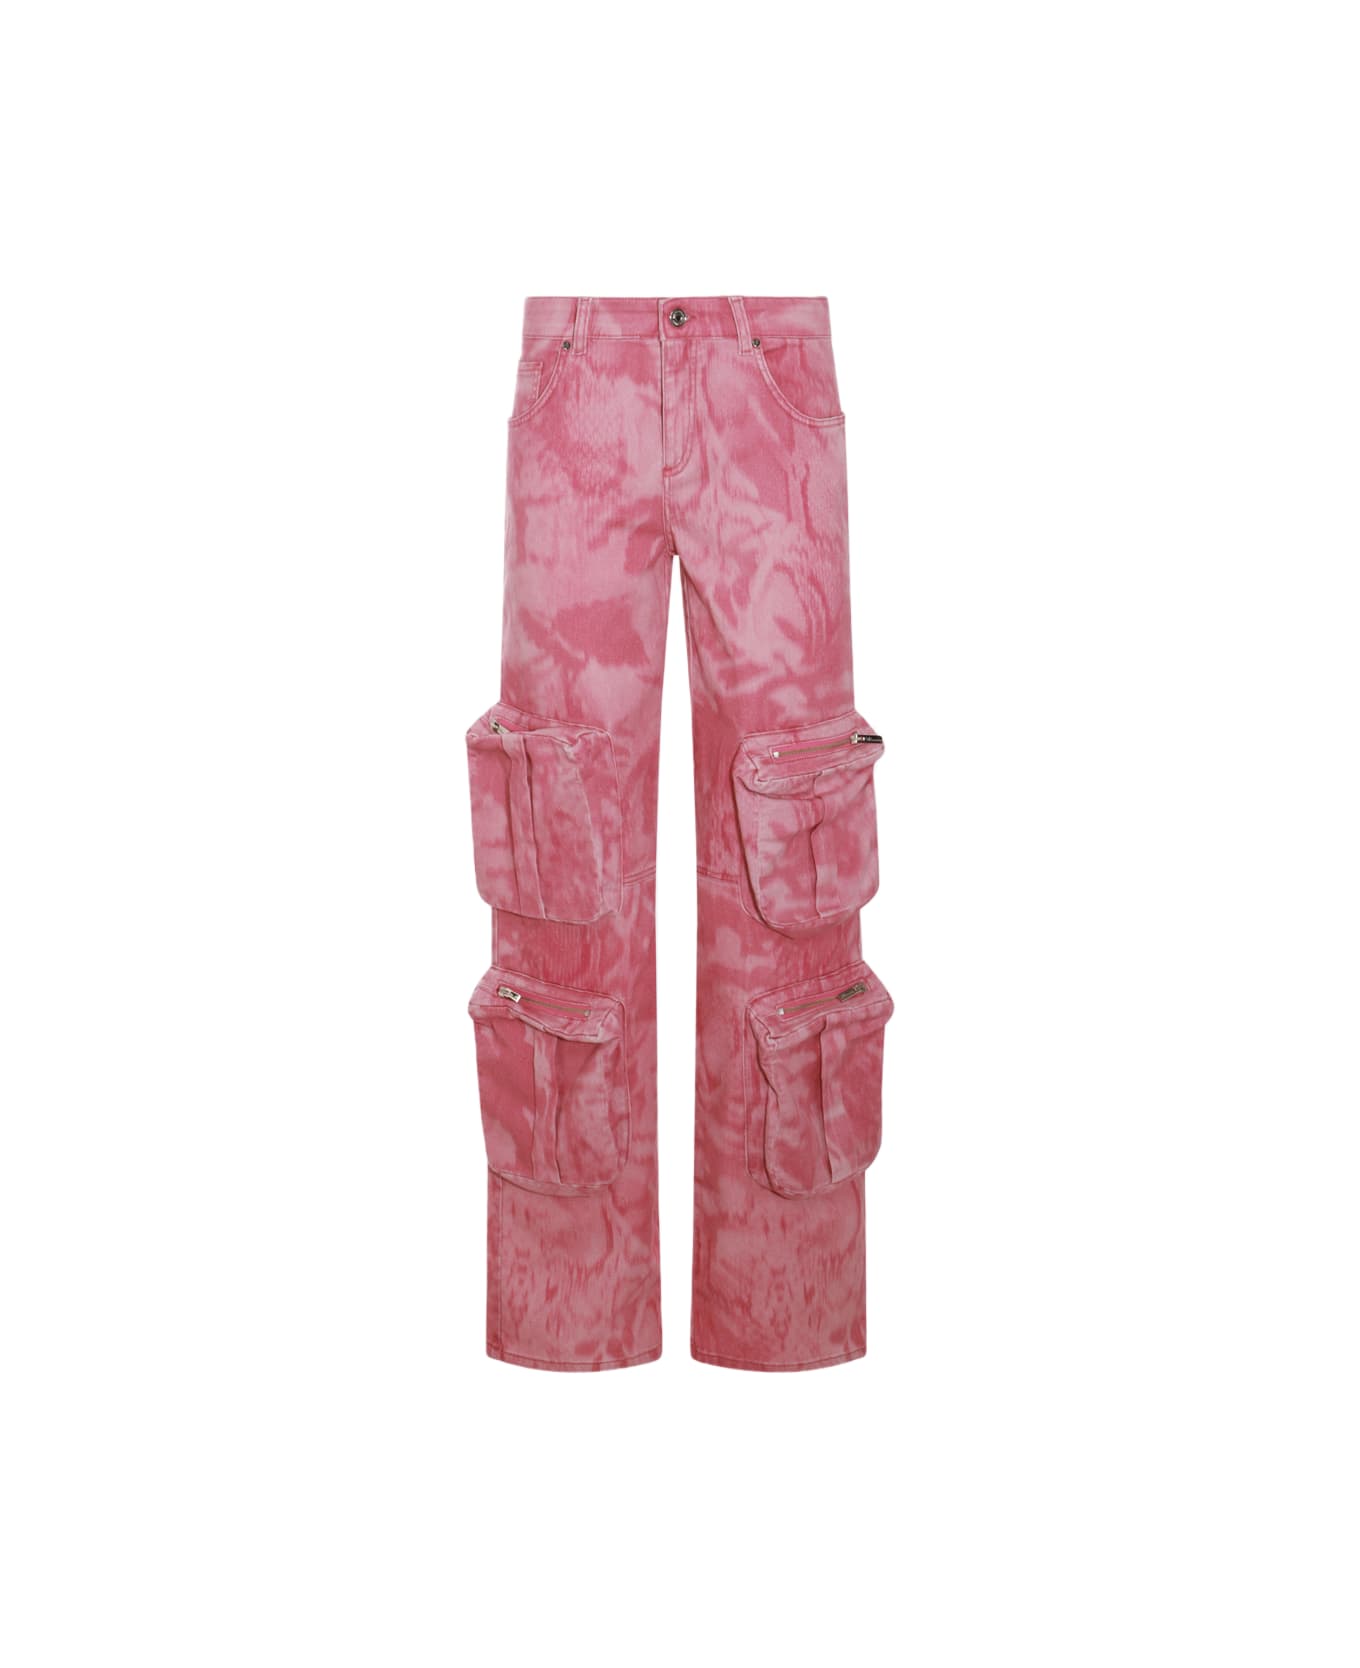 Blumarine Pink Cotton Blend Cargo Jeans - ROSE WINE/WILD ROSE ボトムス